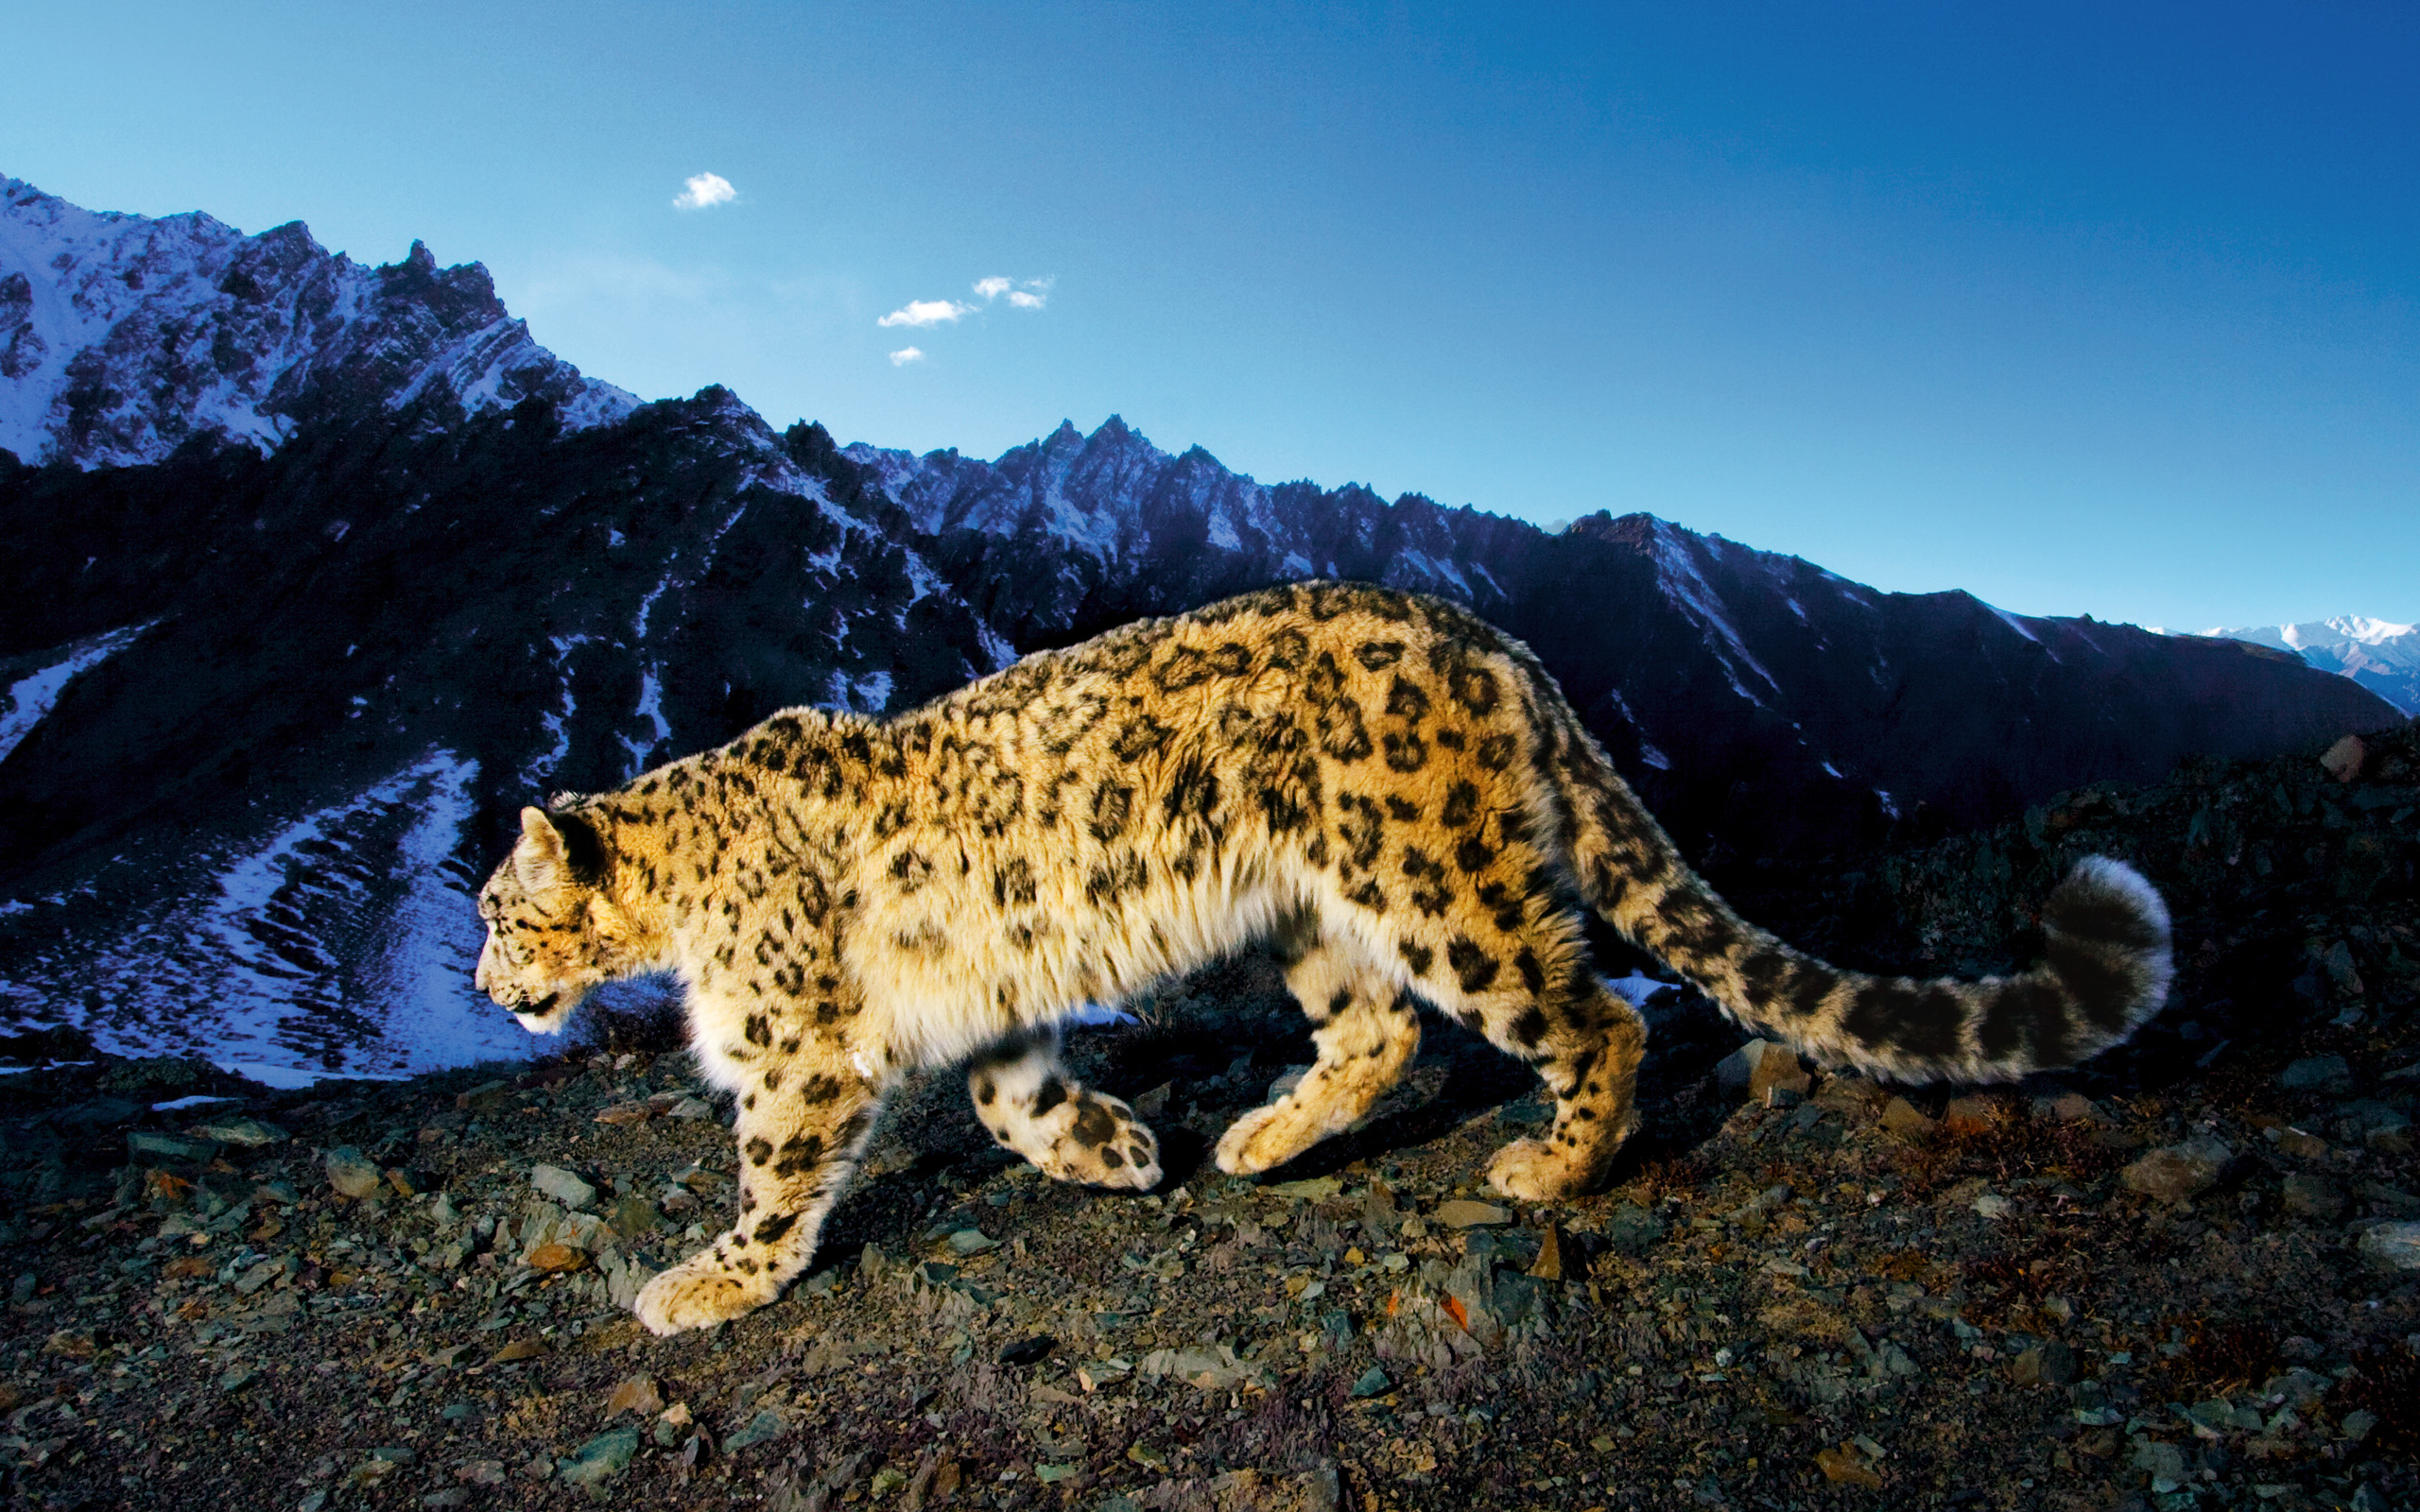 Snow leopard prowling